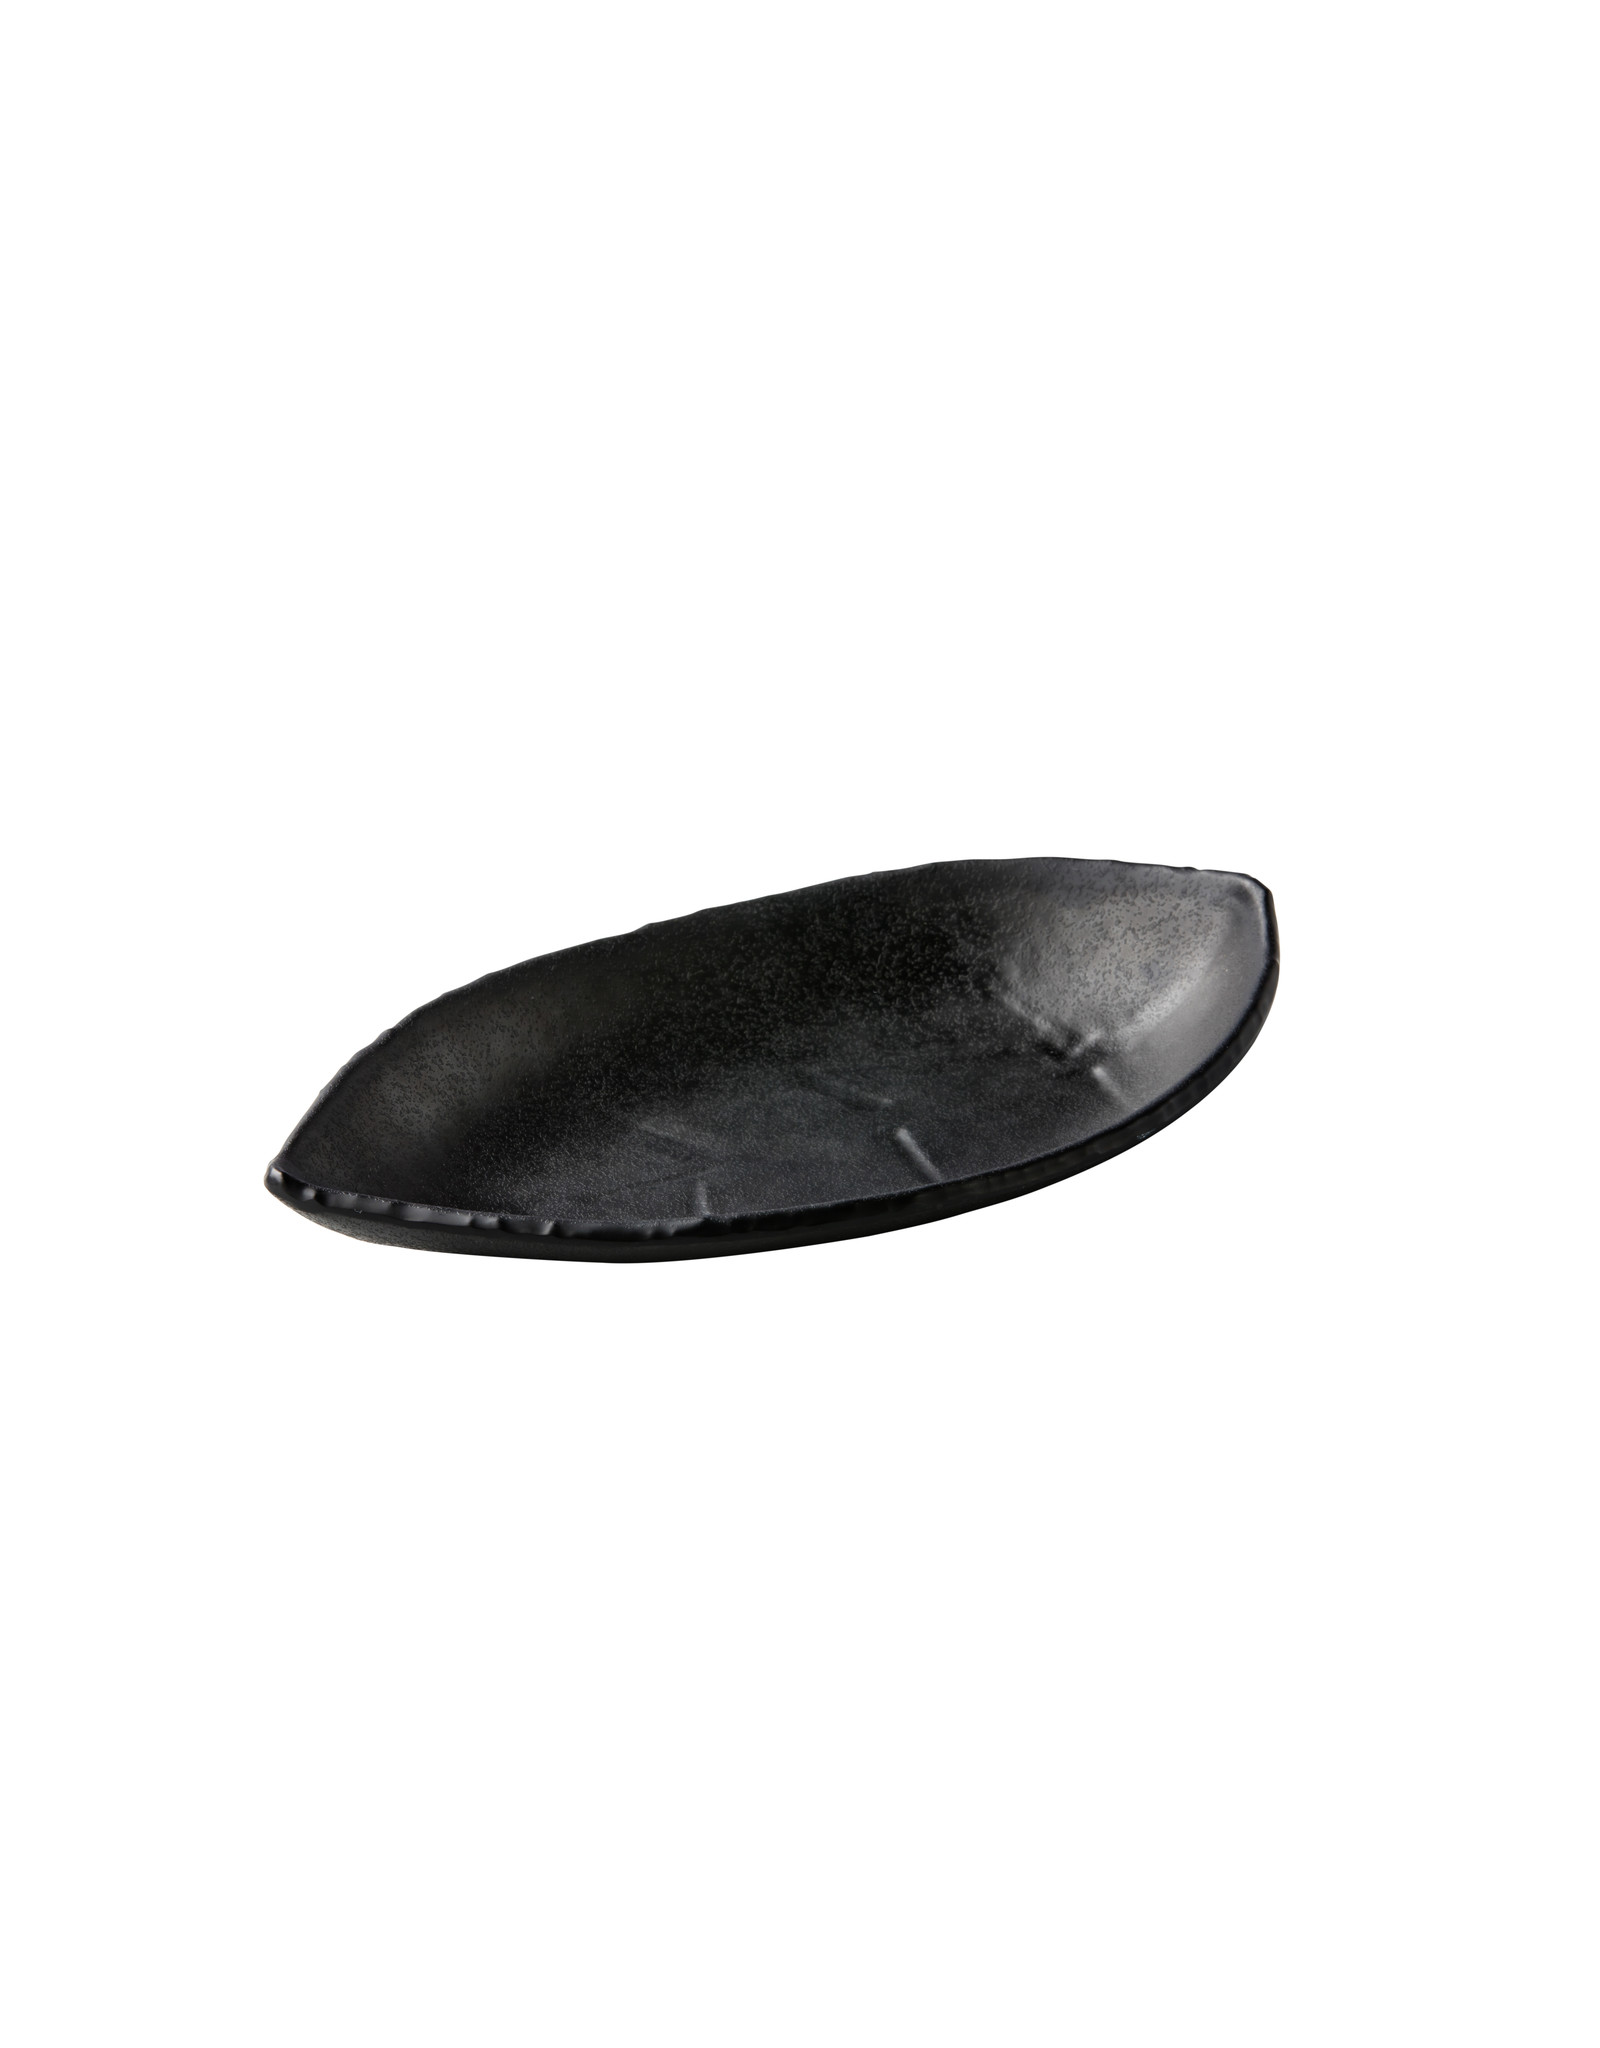 Stylepoint Bladvormige schotel  zwart 22 x 13 cm